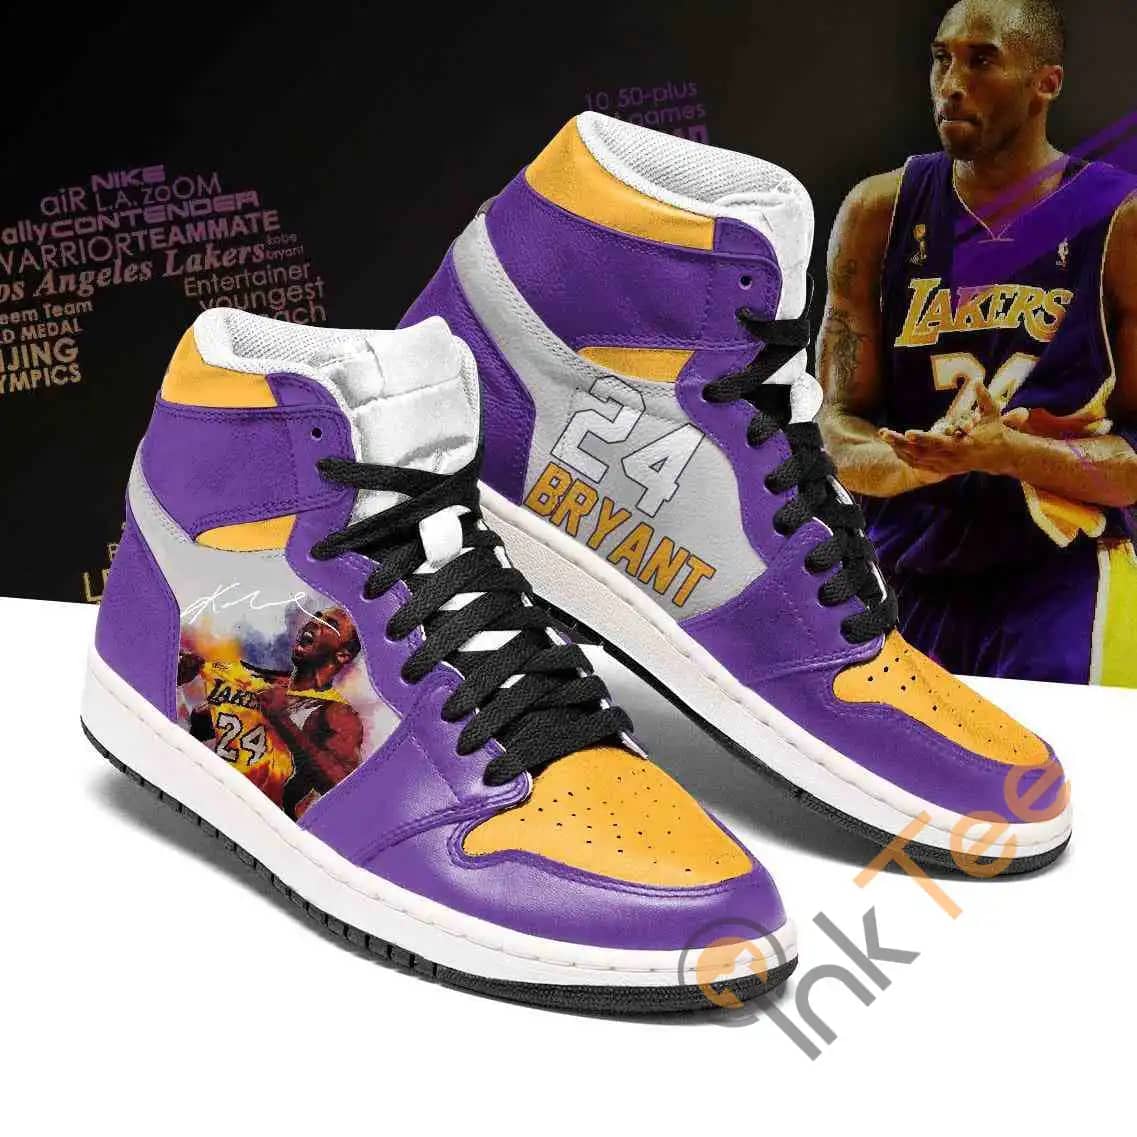 Kobe Bryant Signature 24 Custom Air Jordan Shoes